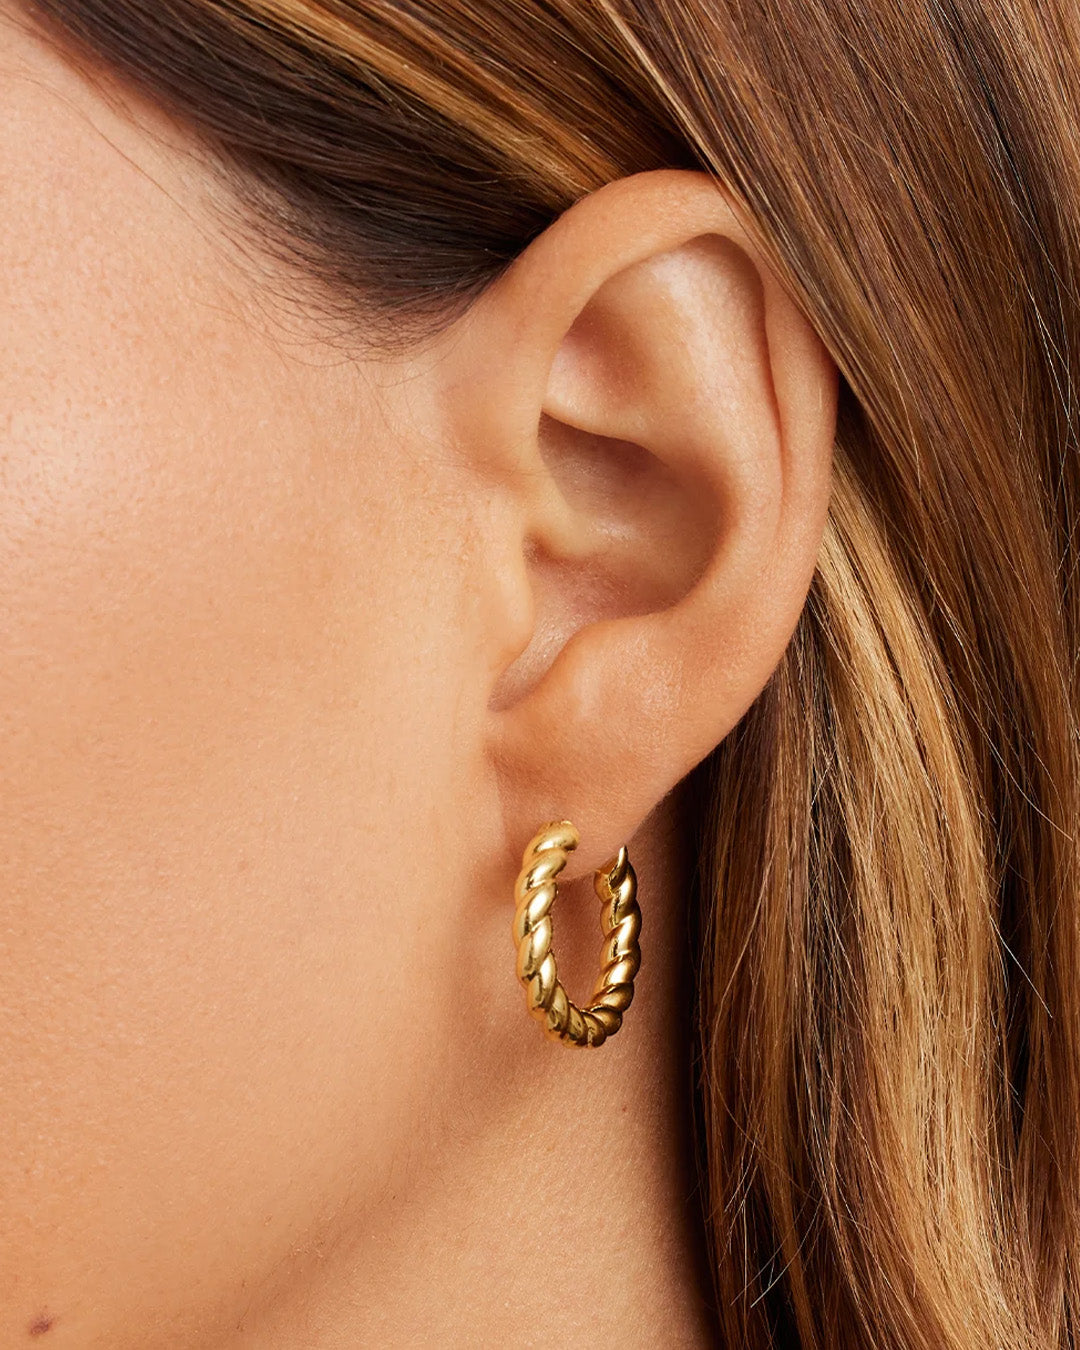 BRAIDED EARRINGS - Best Gifts Under $50 for Women